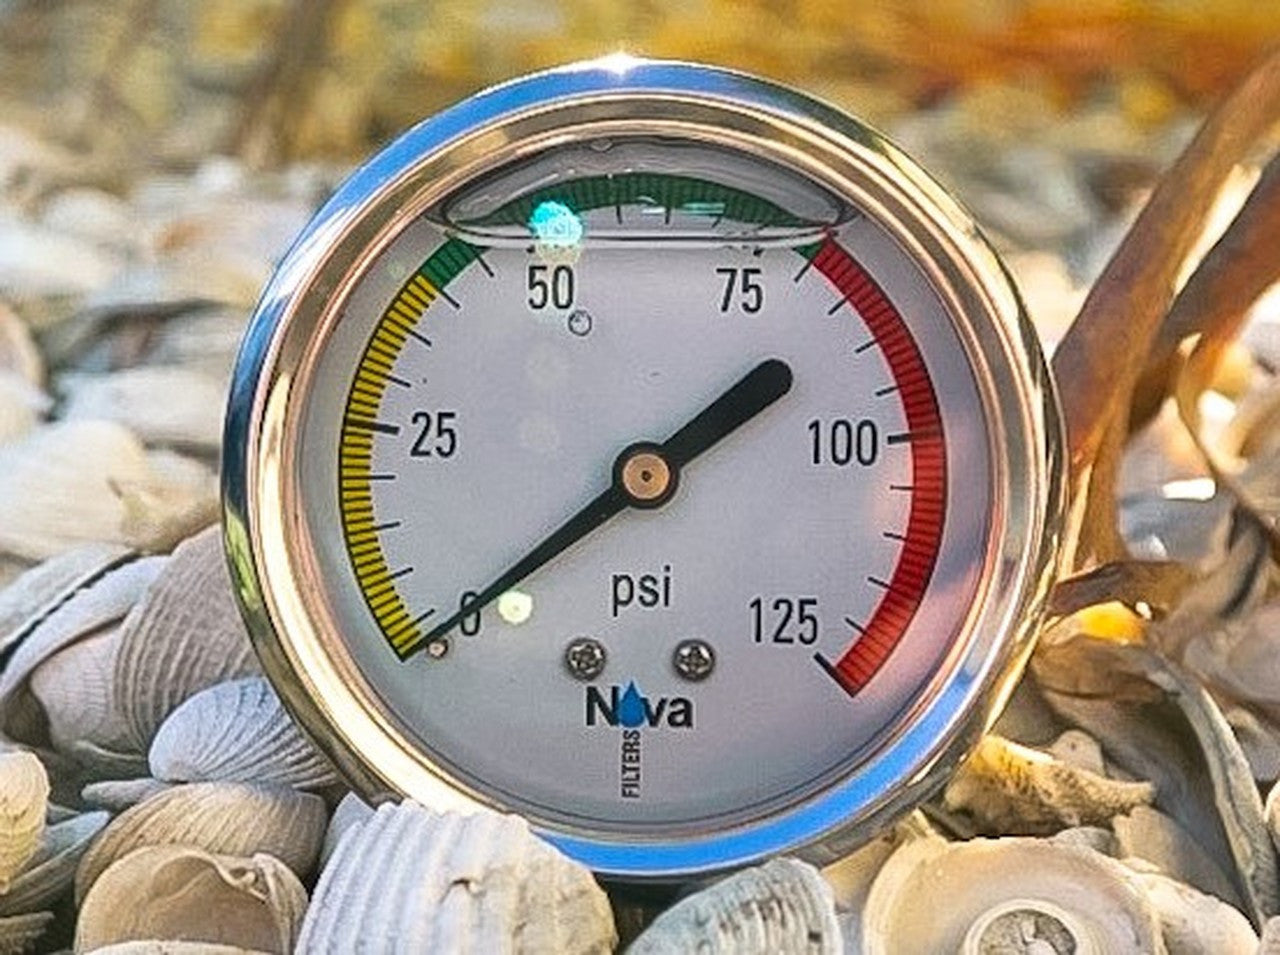 Nova Reverse Osmosis pressure gauge glycerin filled 0-125 psi Nova3